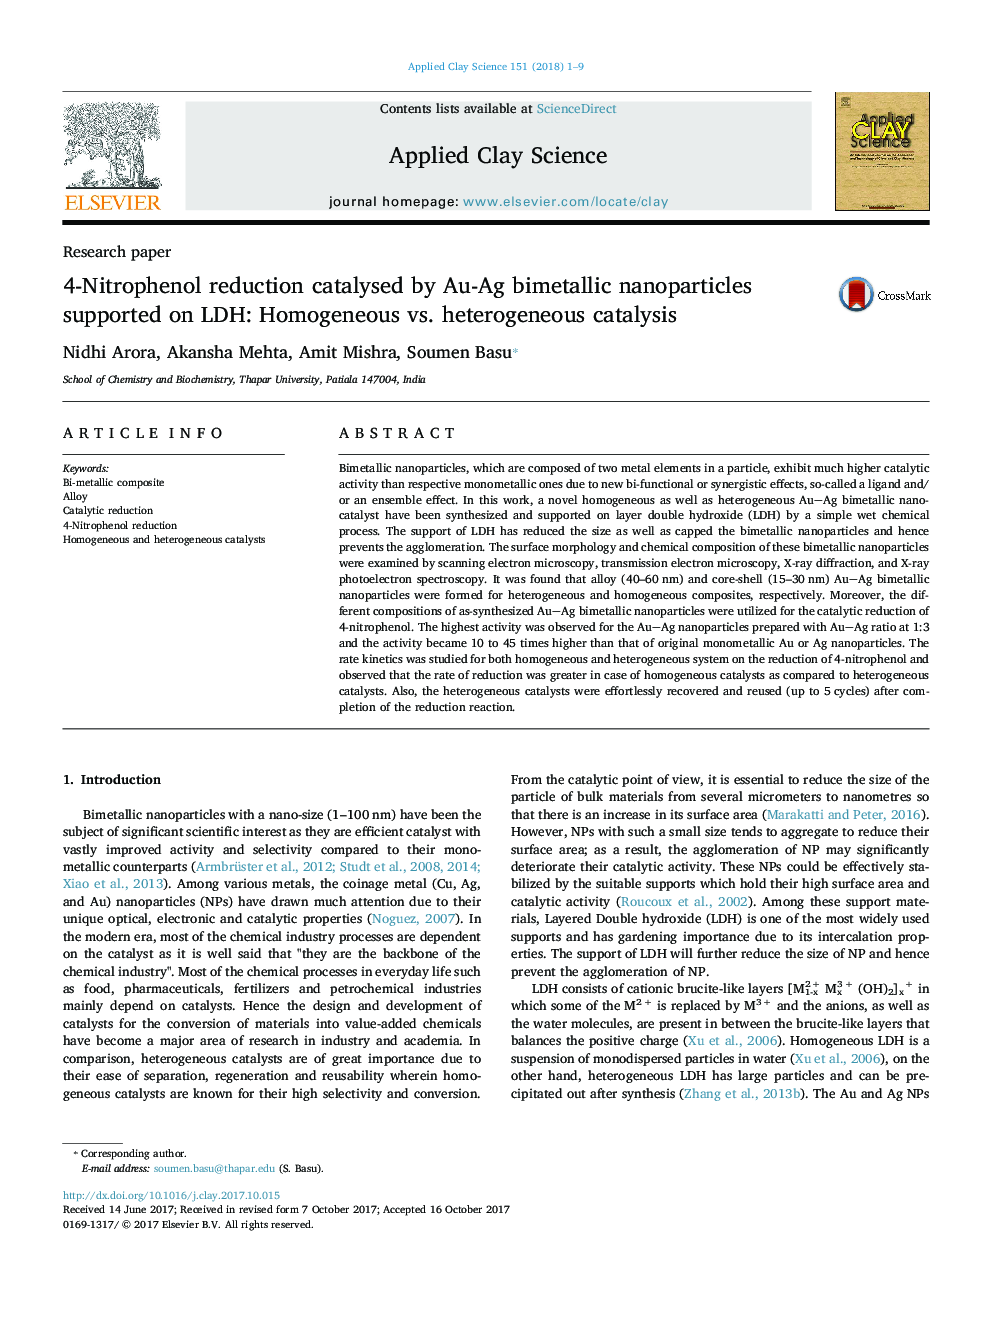 4-Nitrophenol reduction catalysed by Au-Ag bimetallic nanoparticles supported on LDH: Homogeneous vs. heterogeneous catalysis